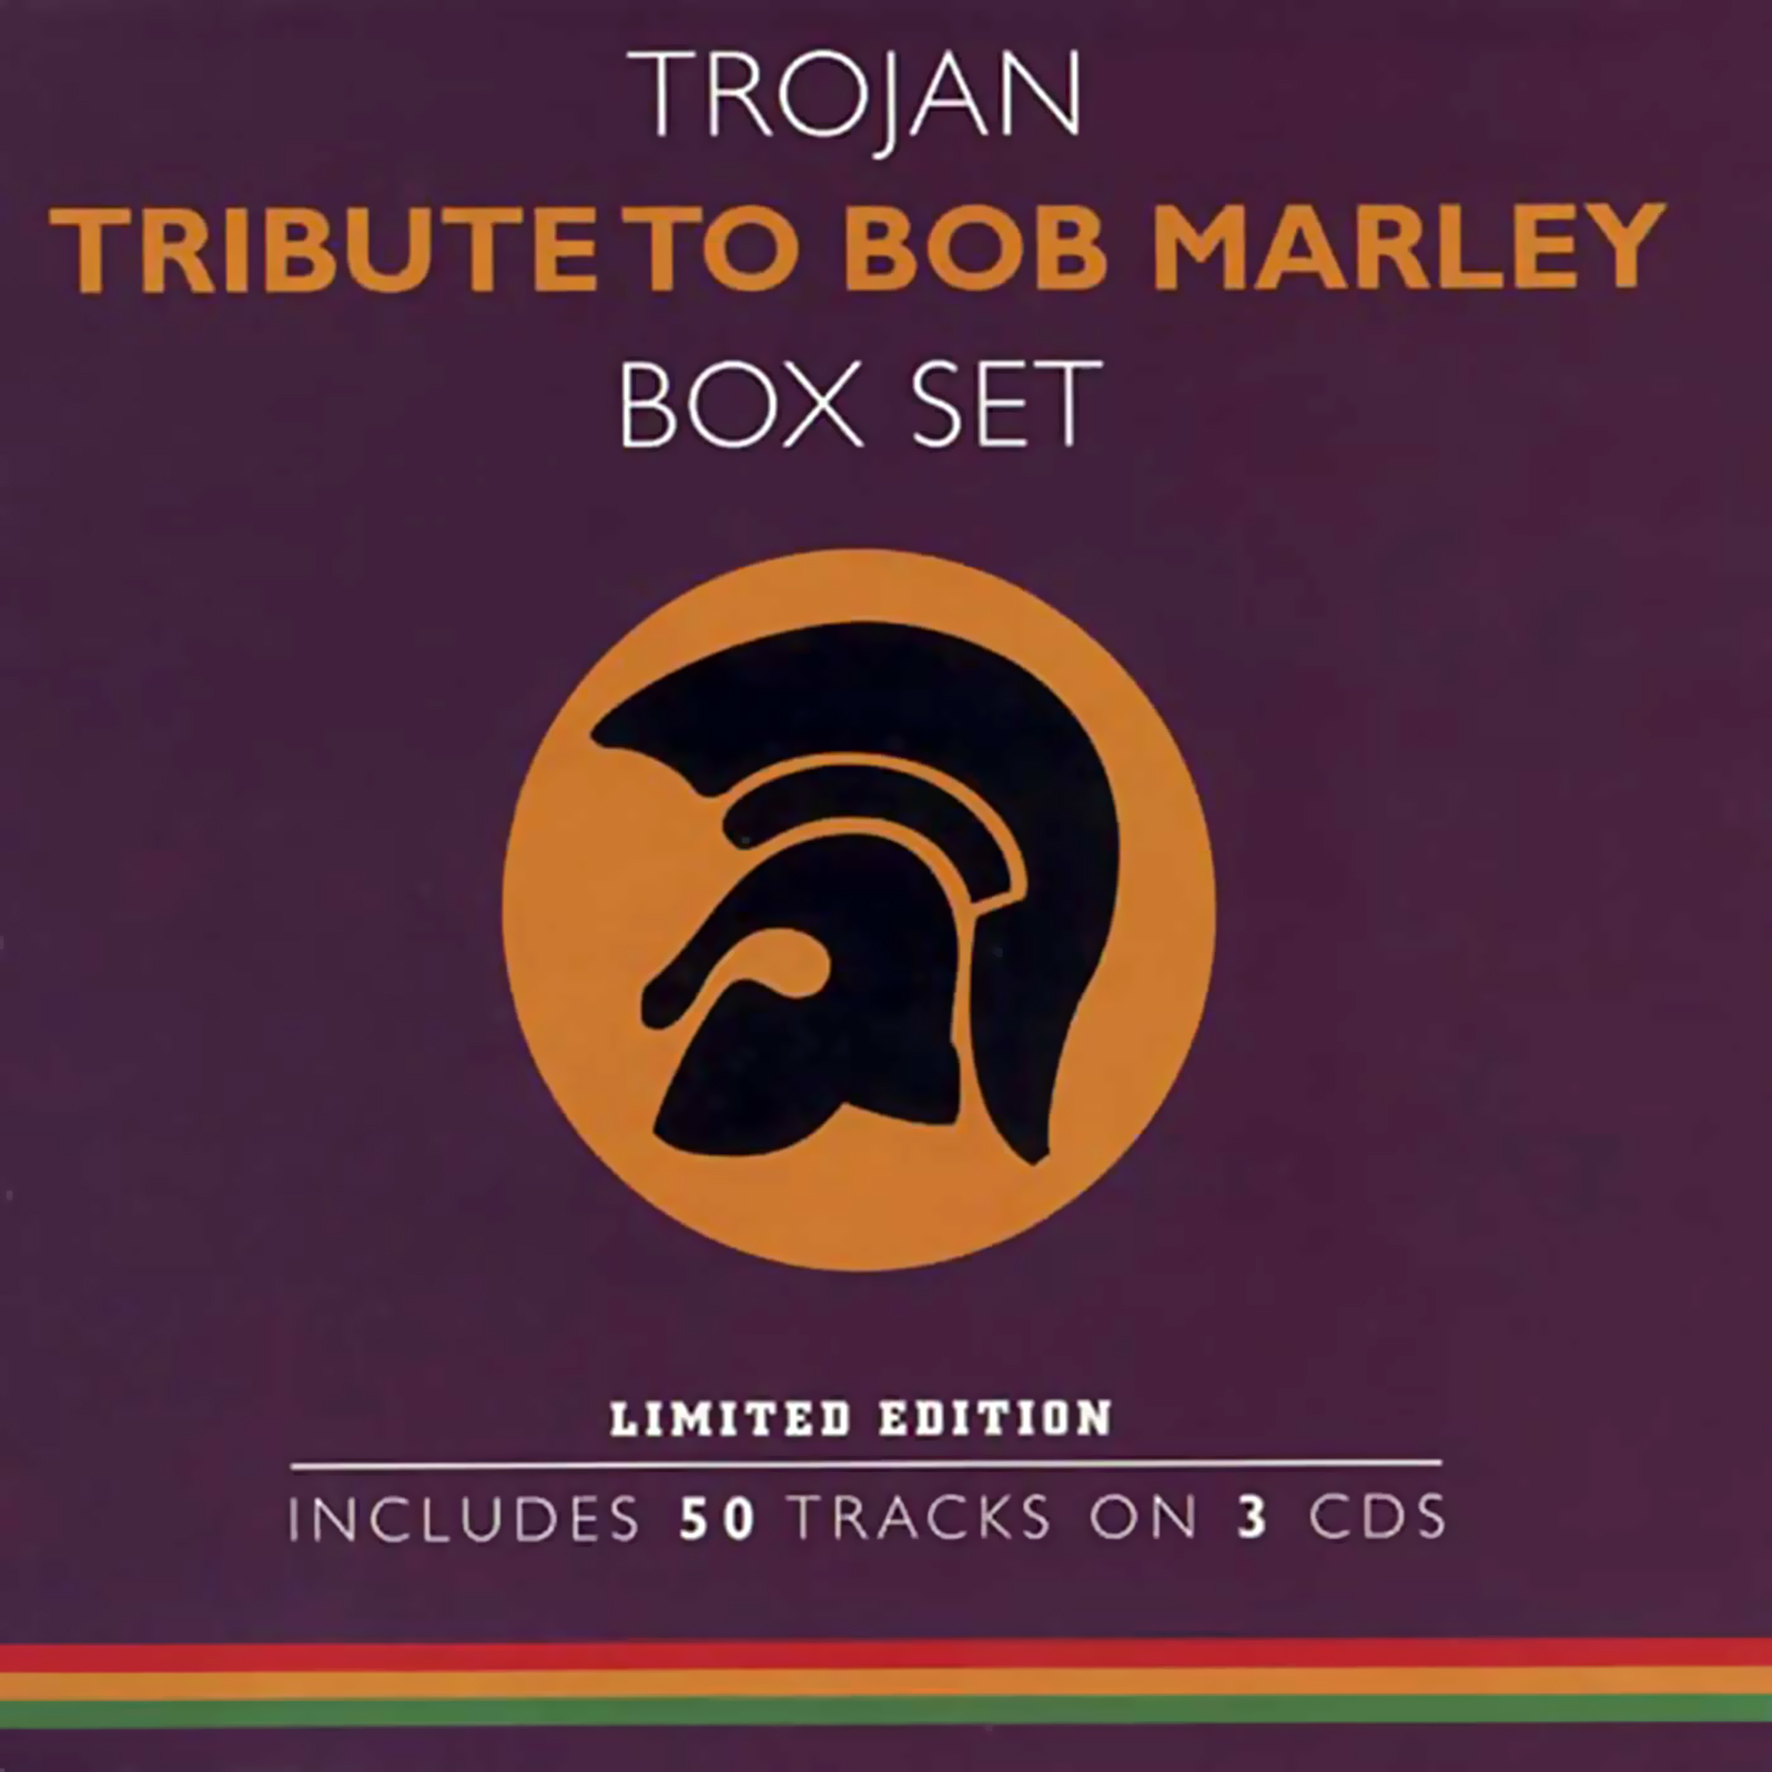 Trojan-set-box